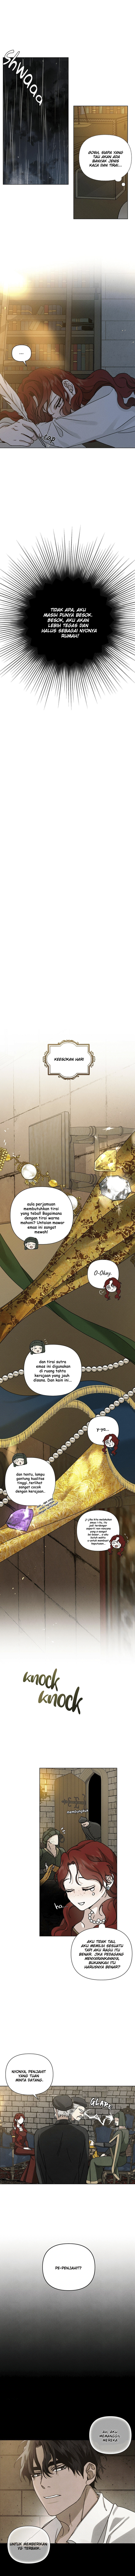 Under the Oak Tree Chapter 13